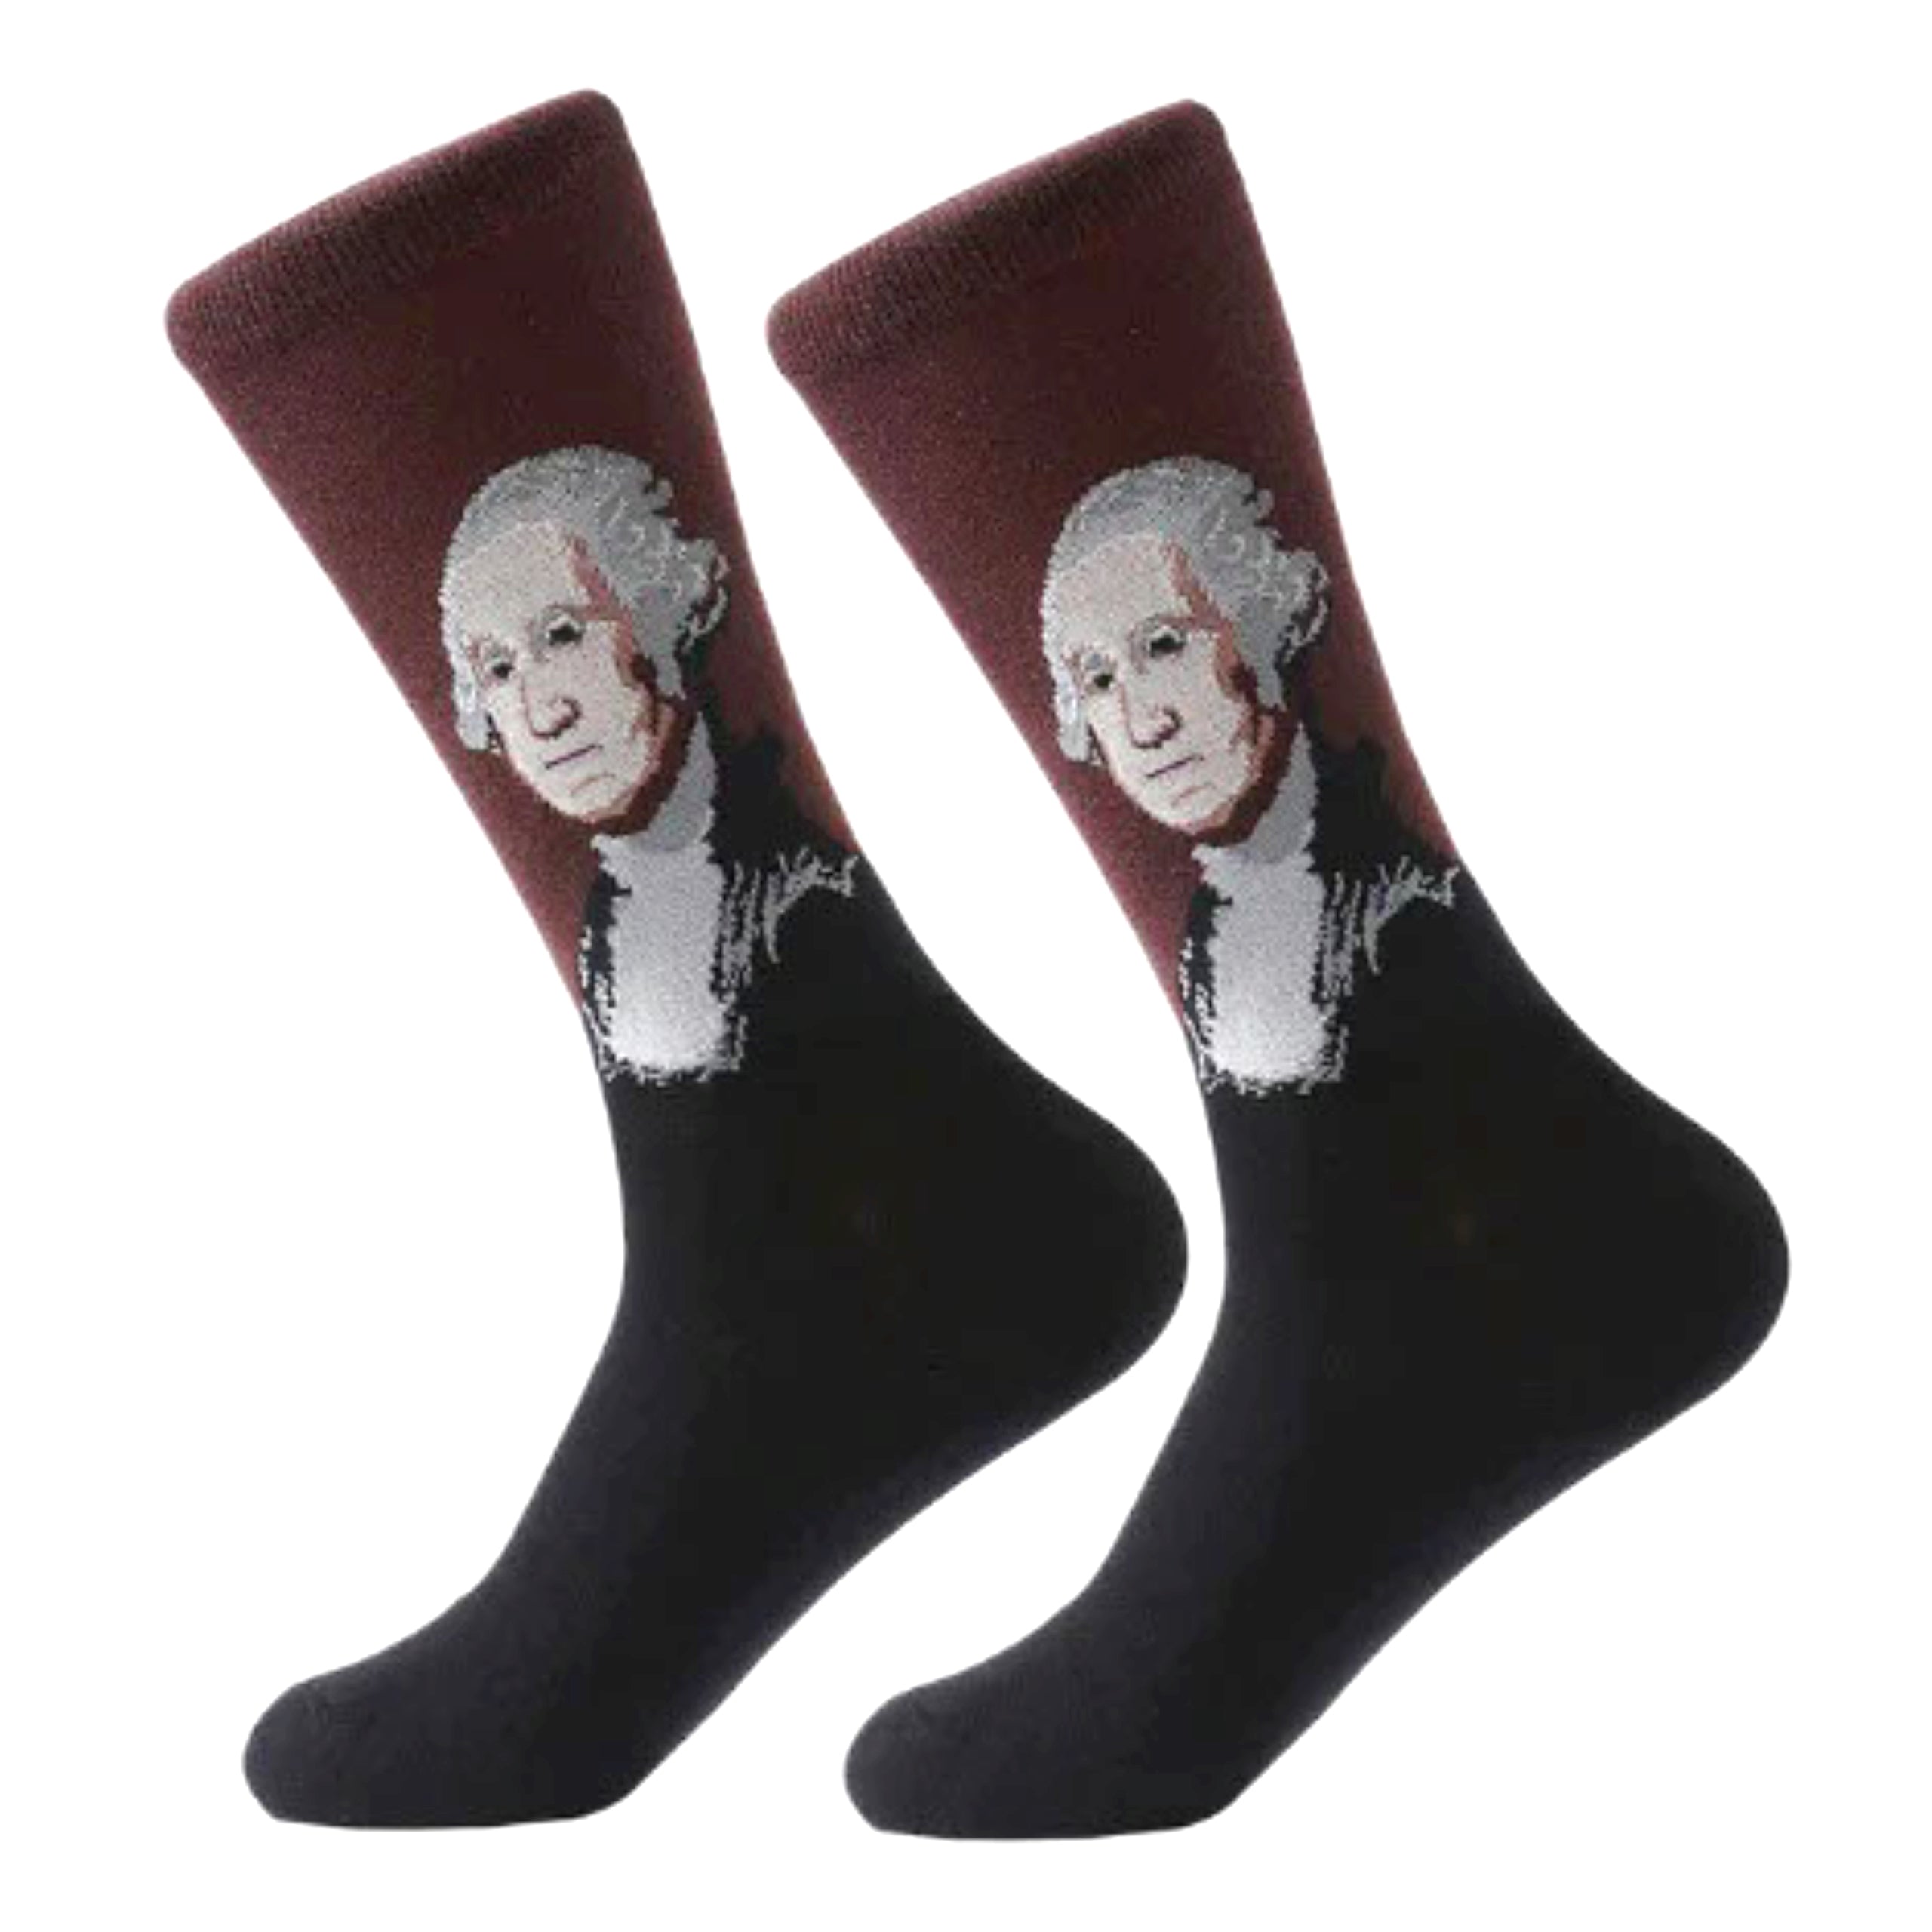 George Washington Socks from the Sock Panda 